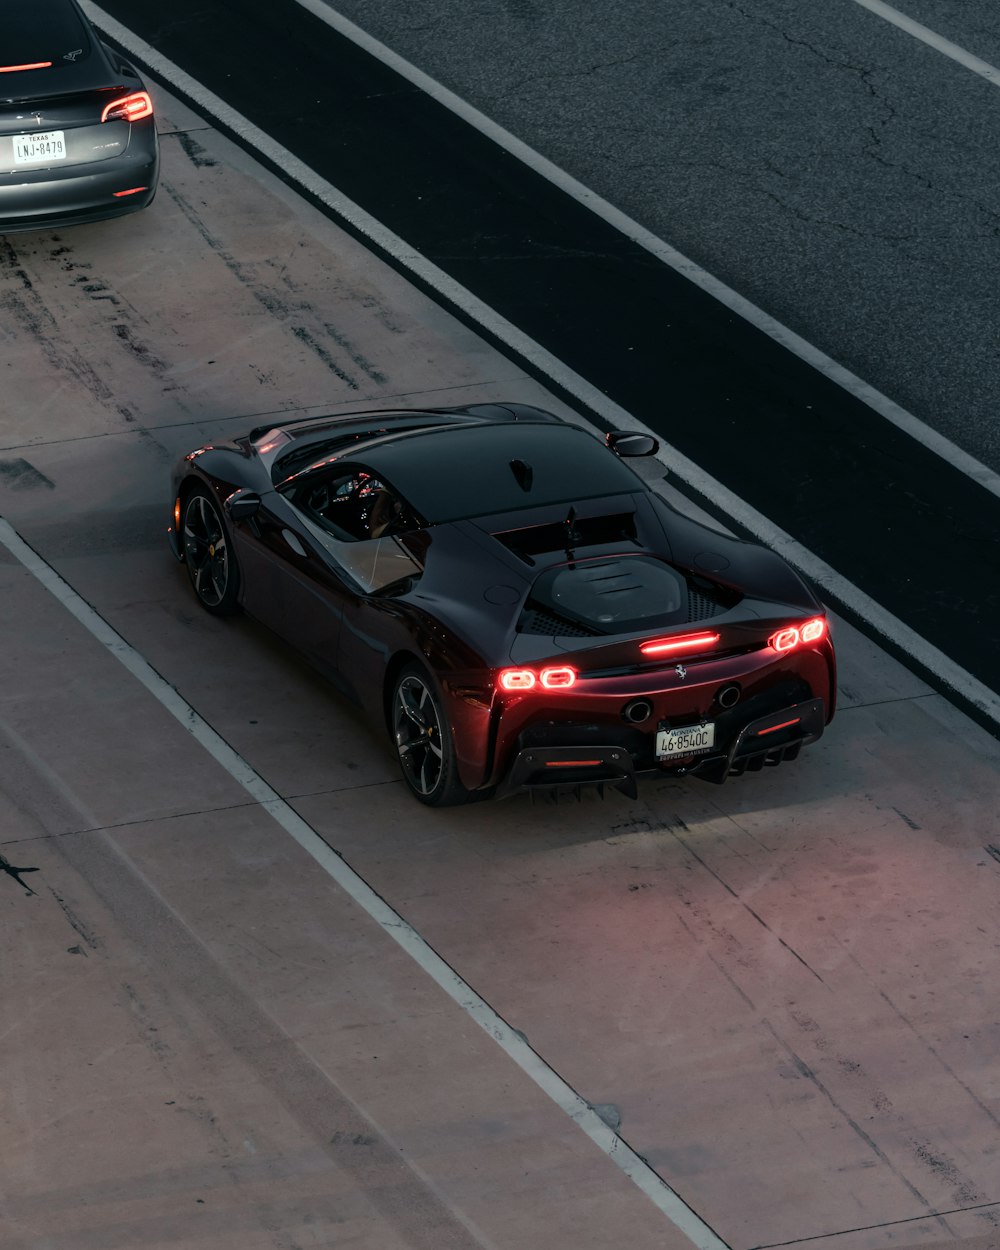 a black sports car on a road